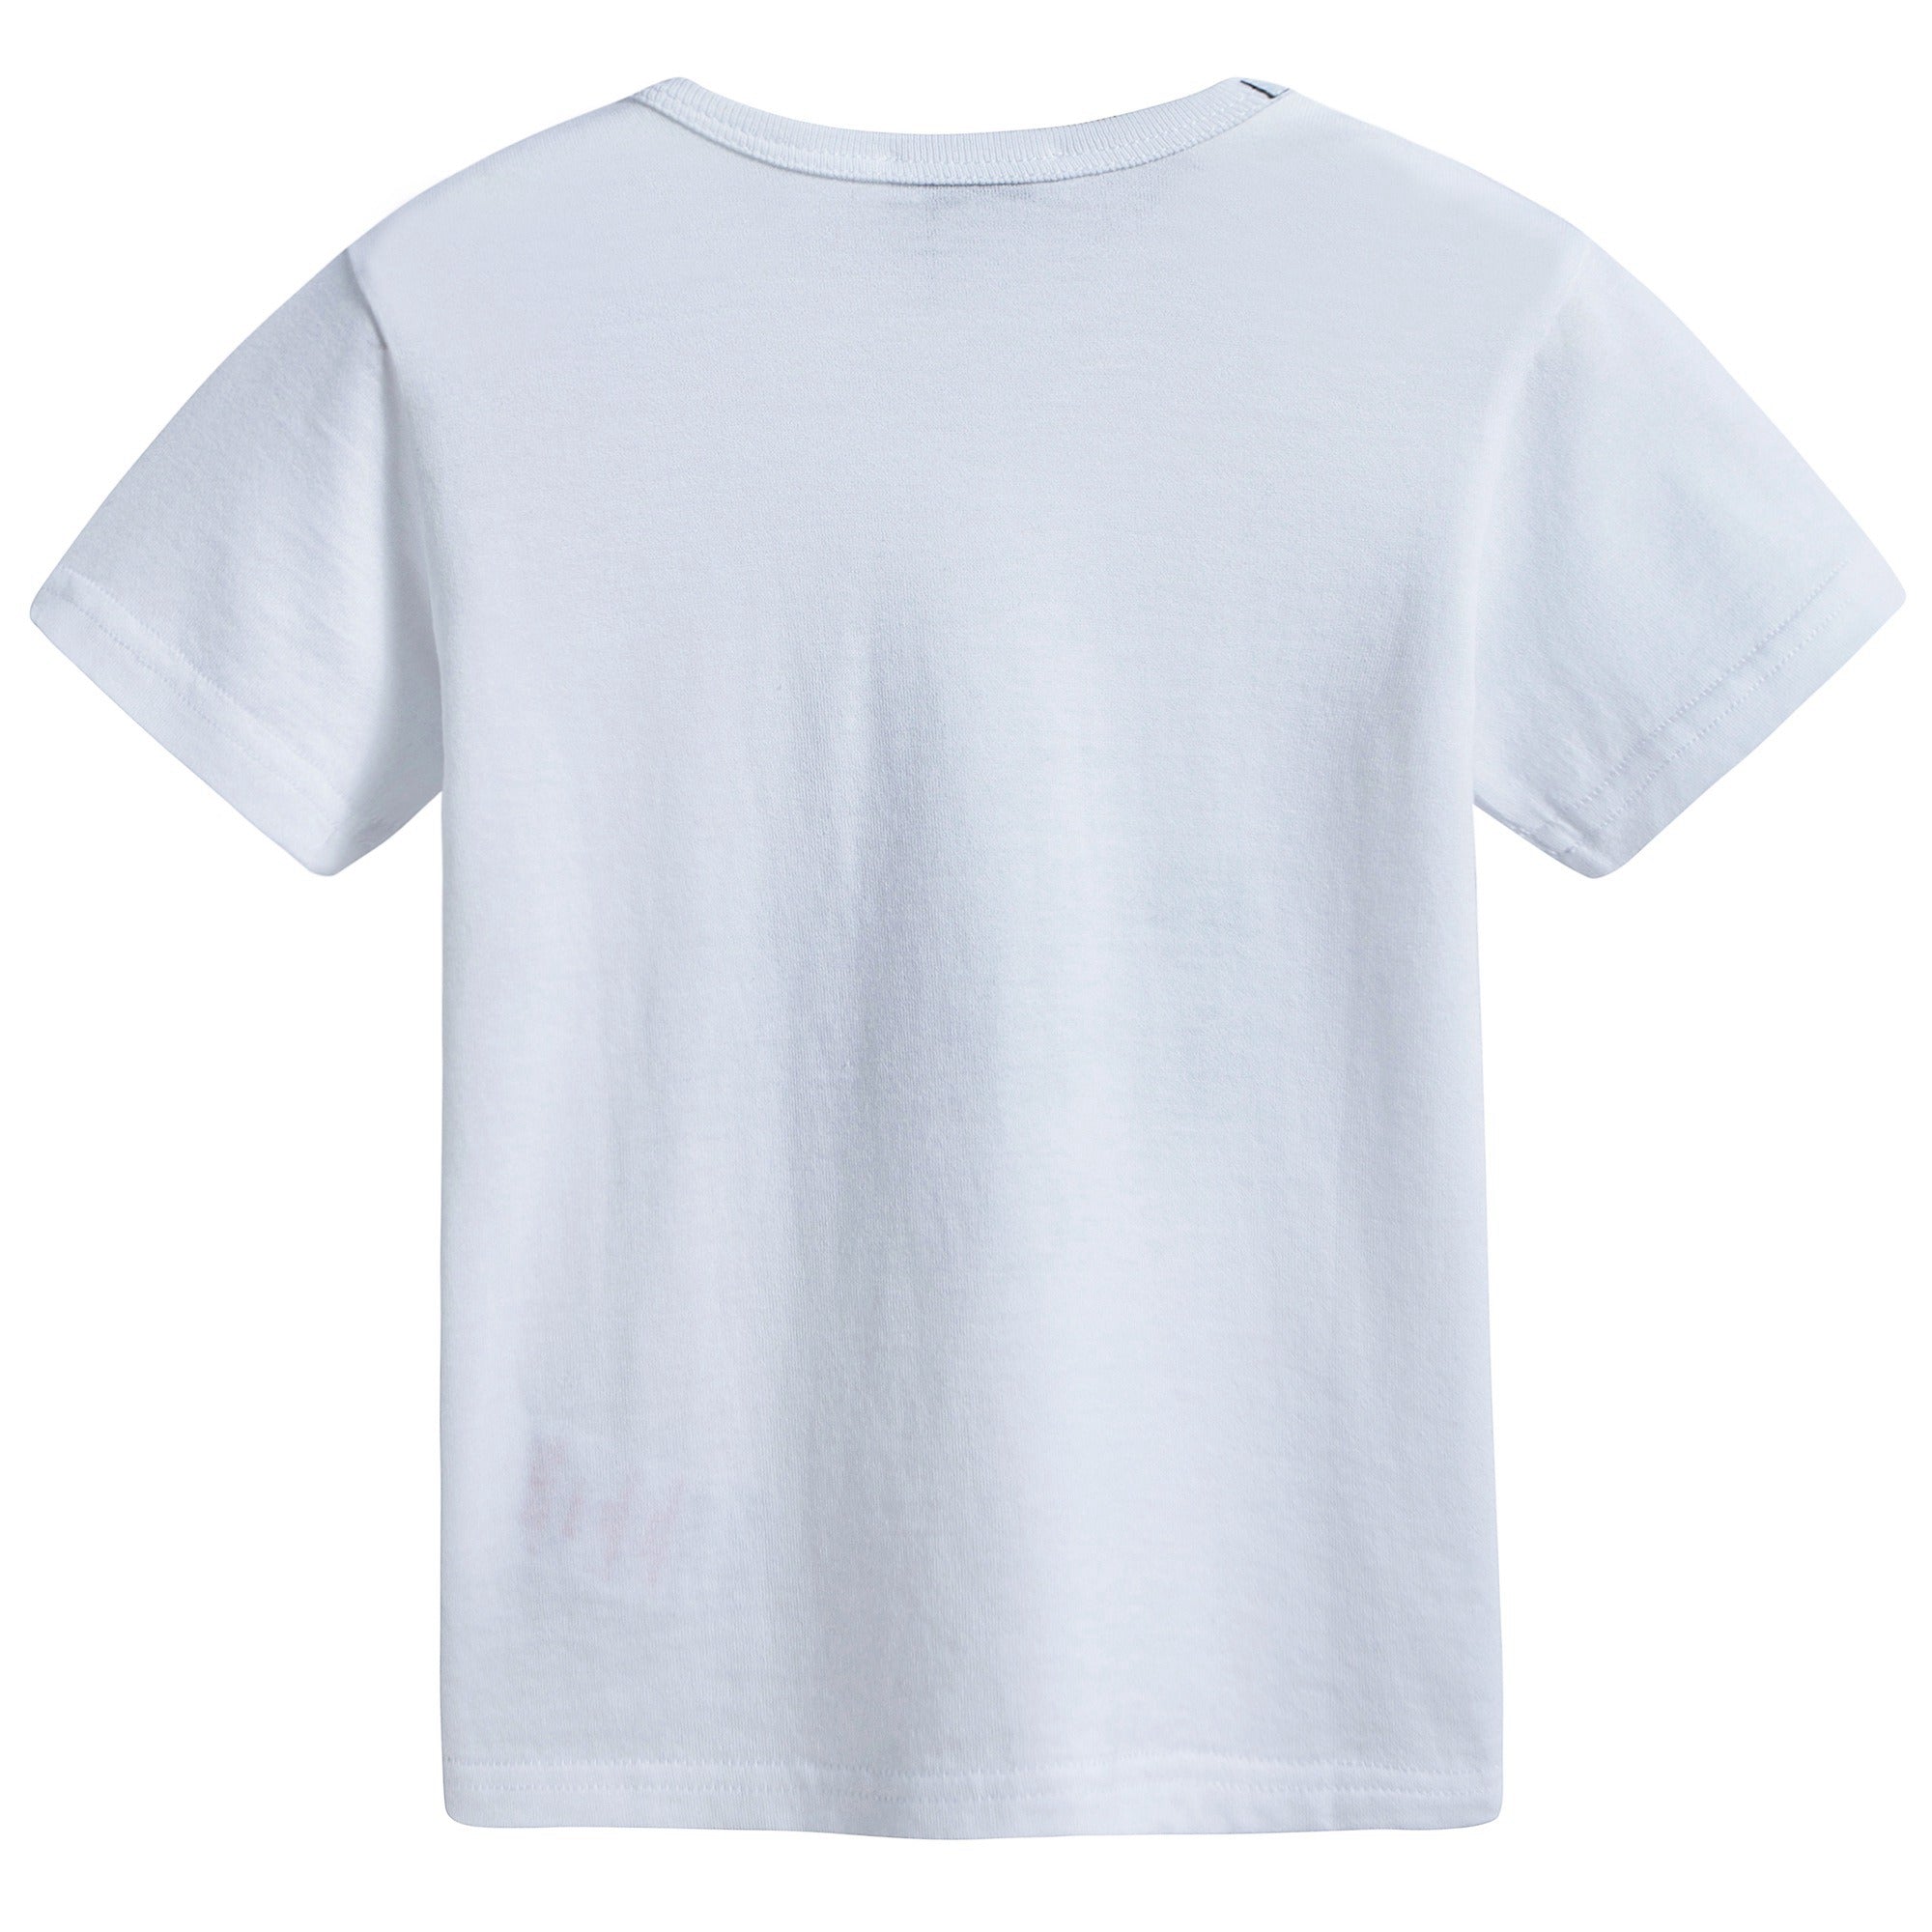 Baby Boys Dark White Pringting Cotton T-shirt